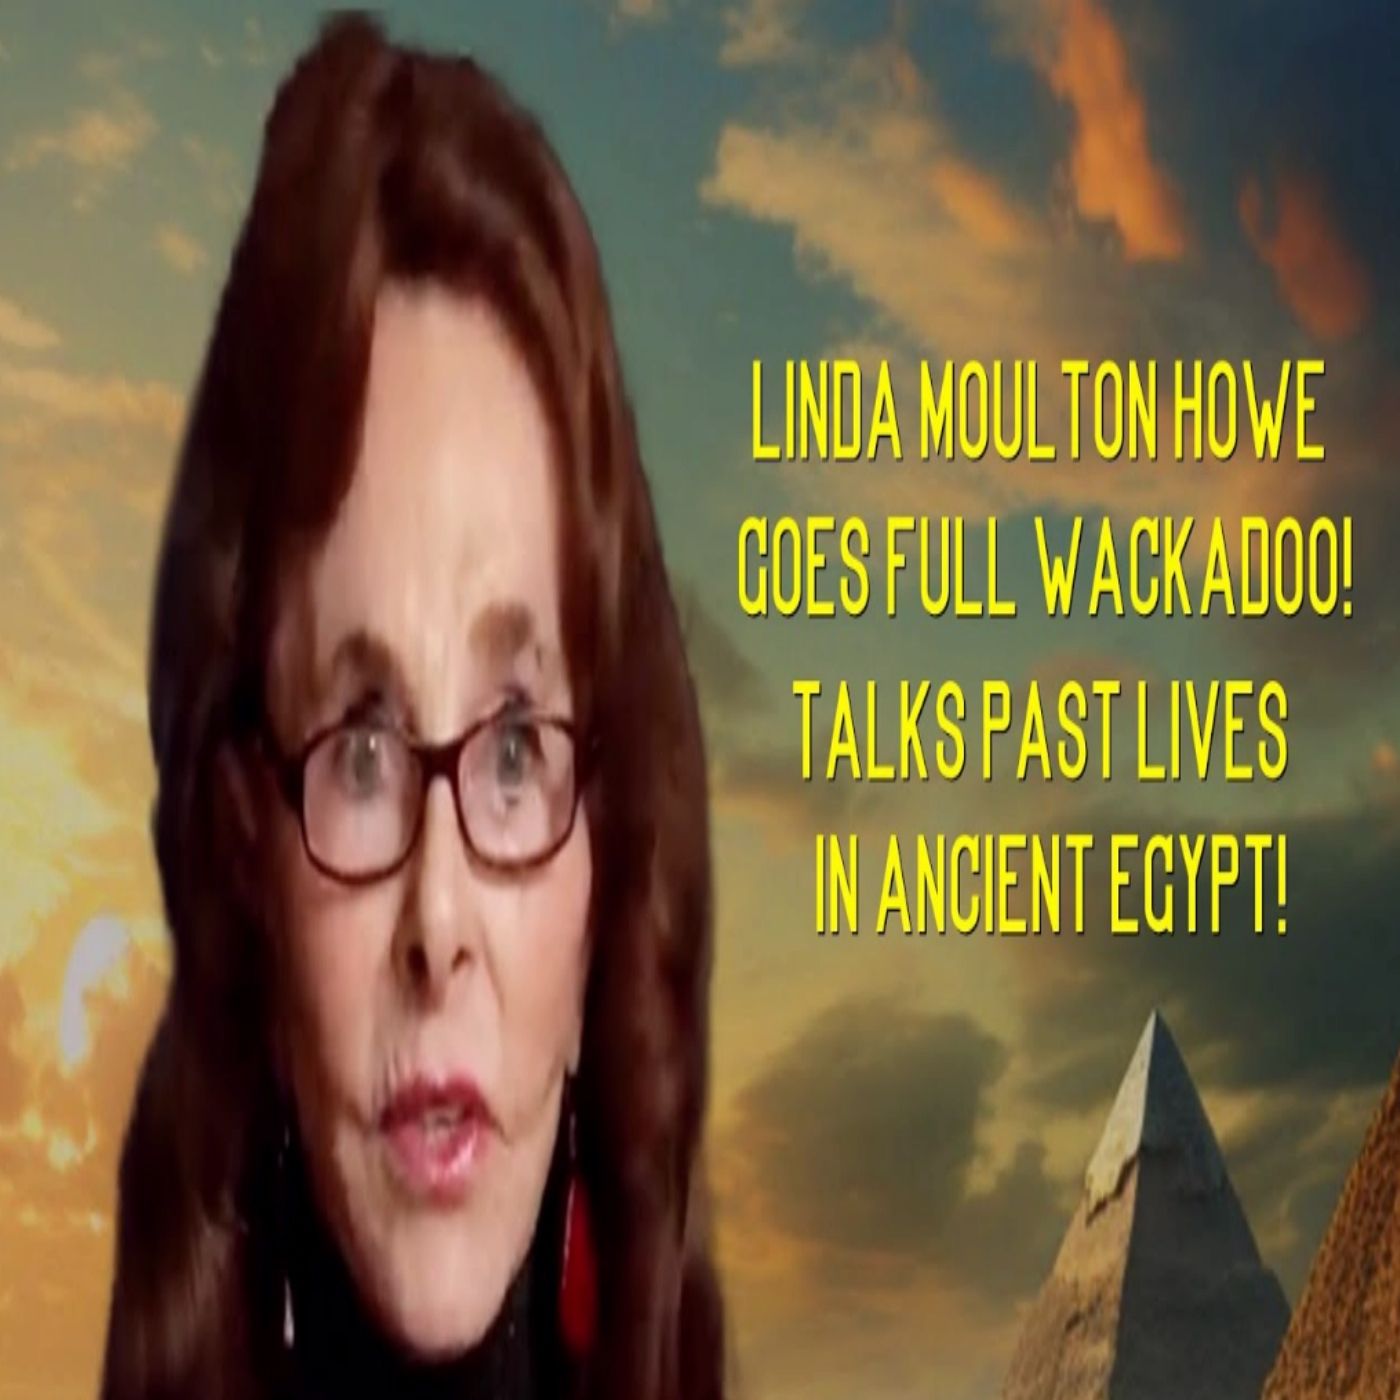 Linda Moulton Howe goes full WACKADOO! Talks past lives in ancient Egypt!